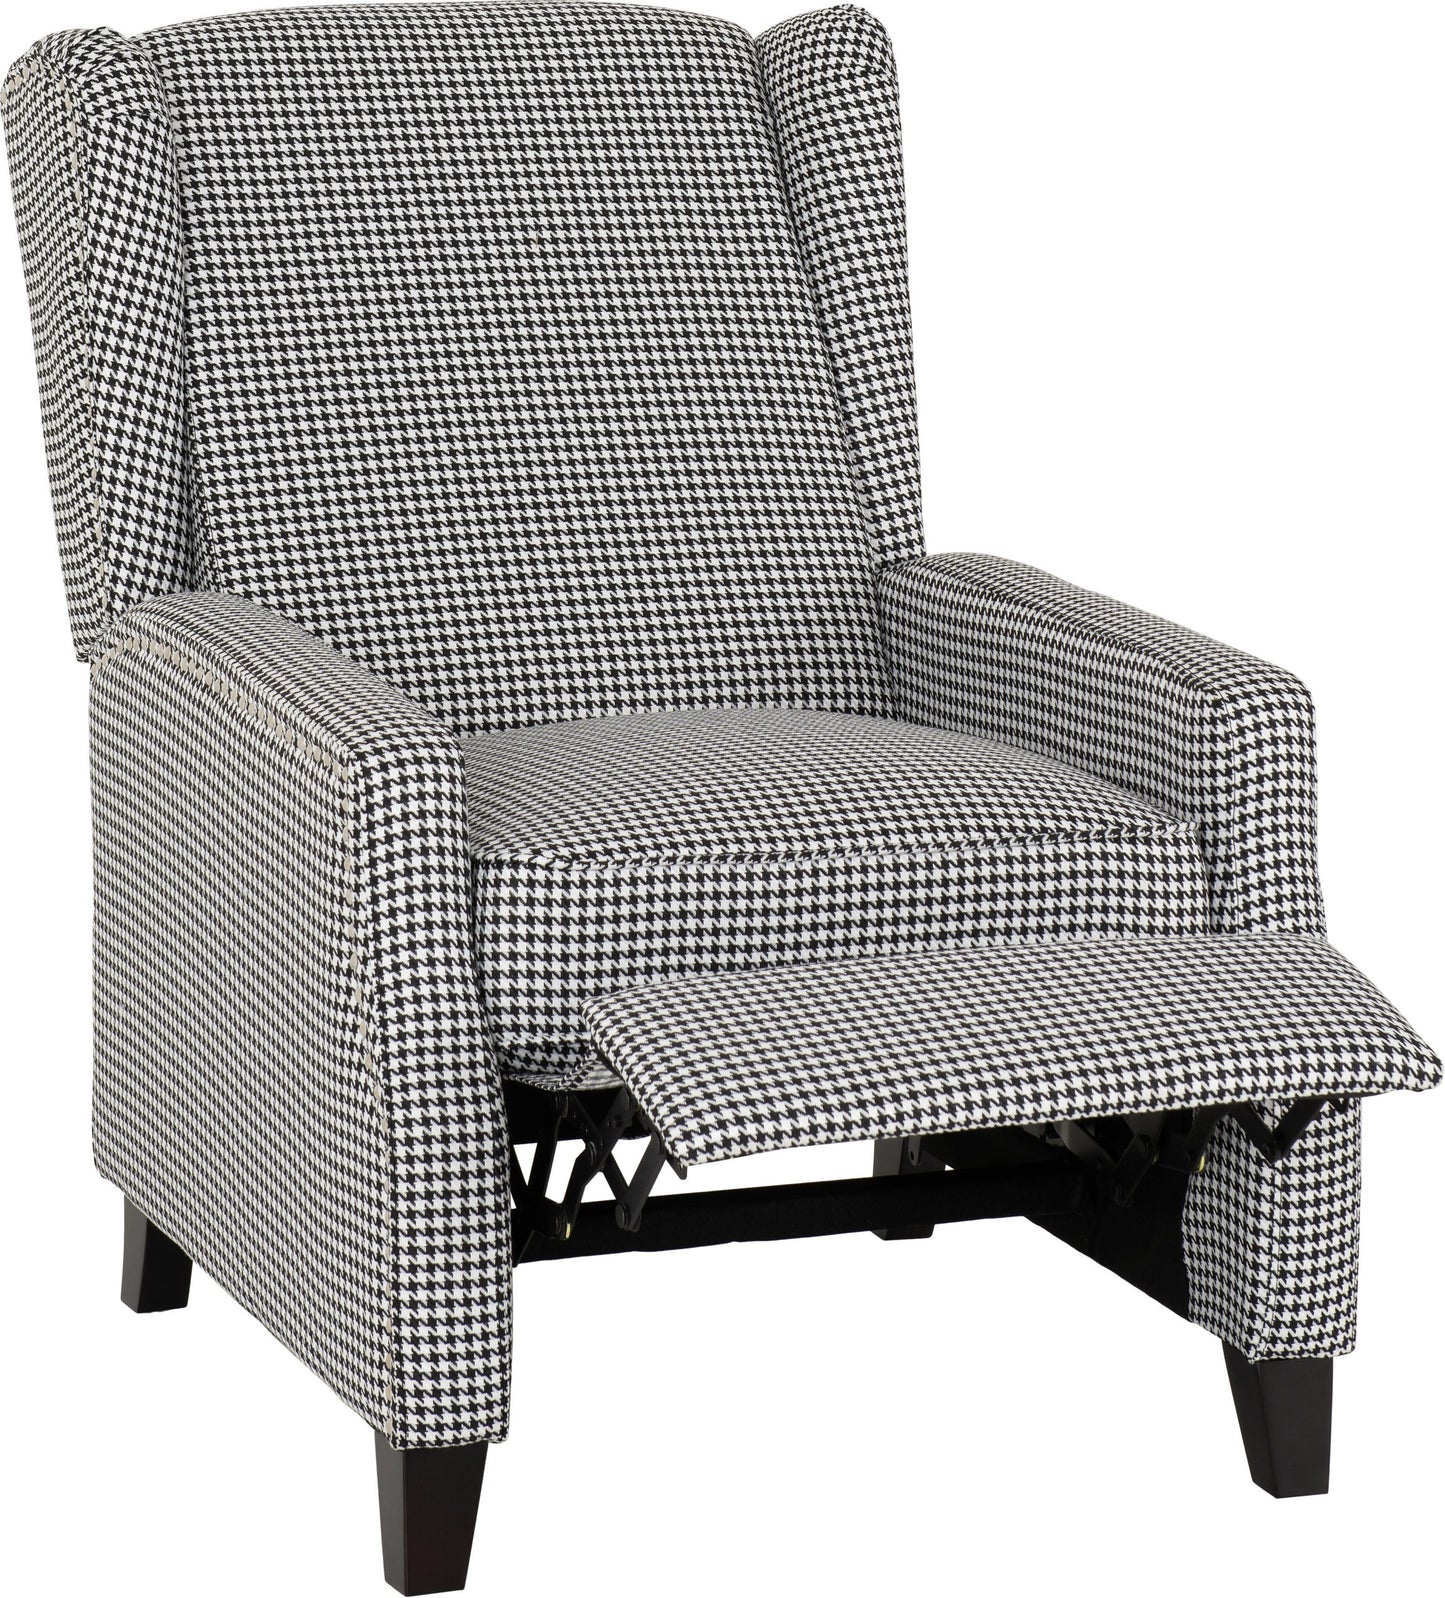 Kensington Recliner Chair